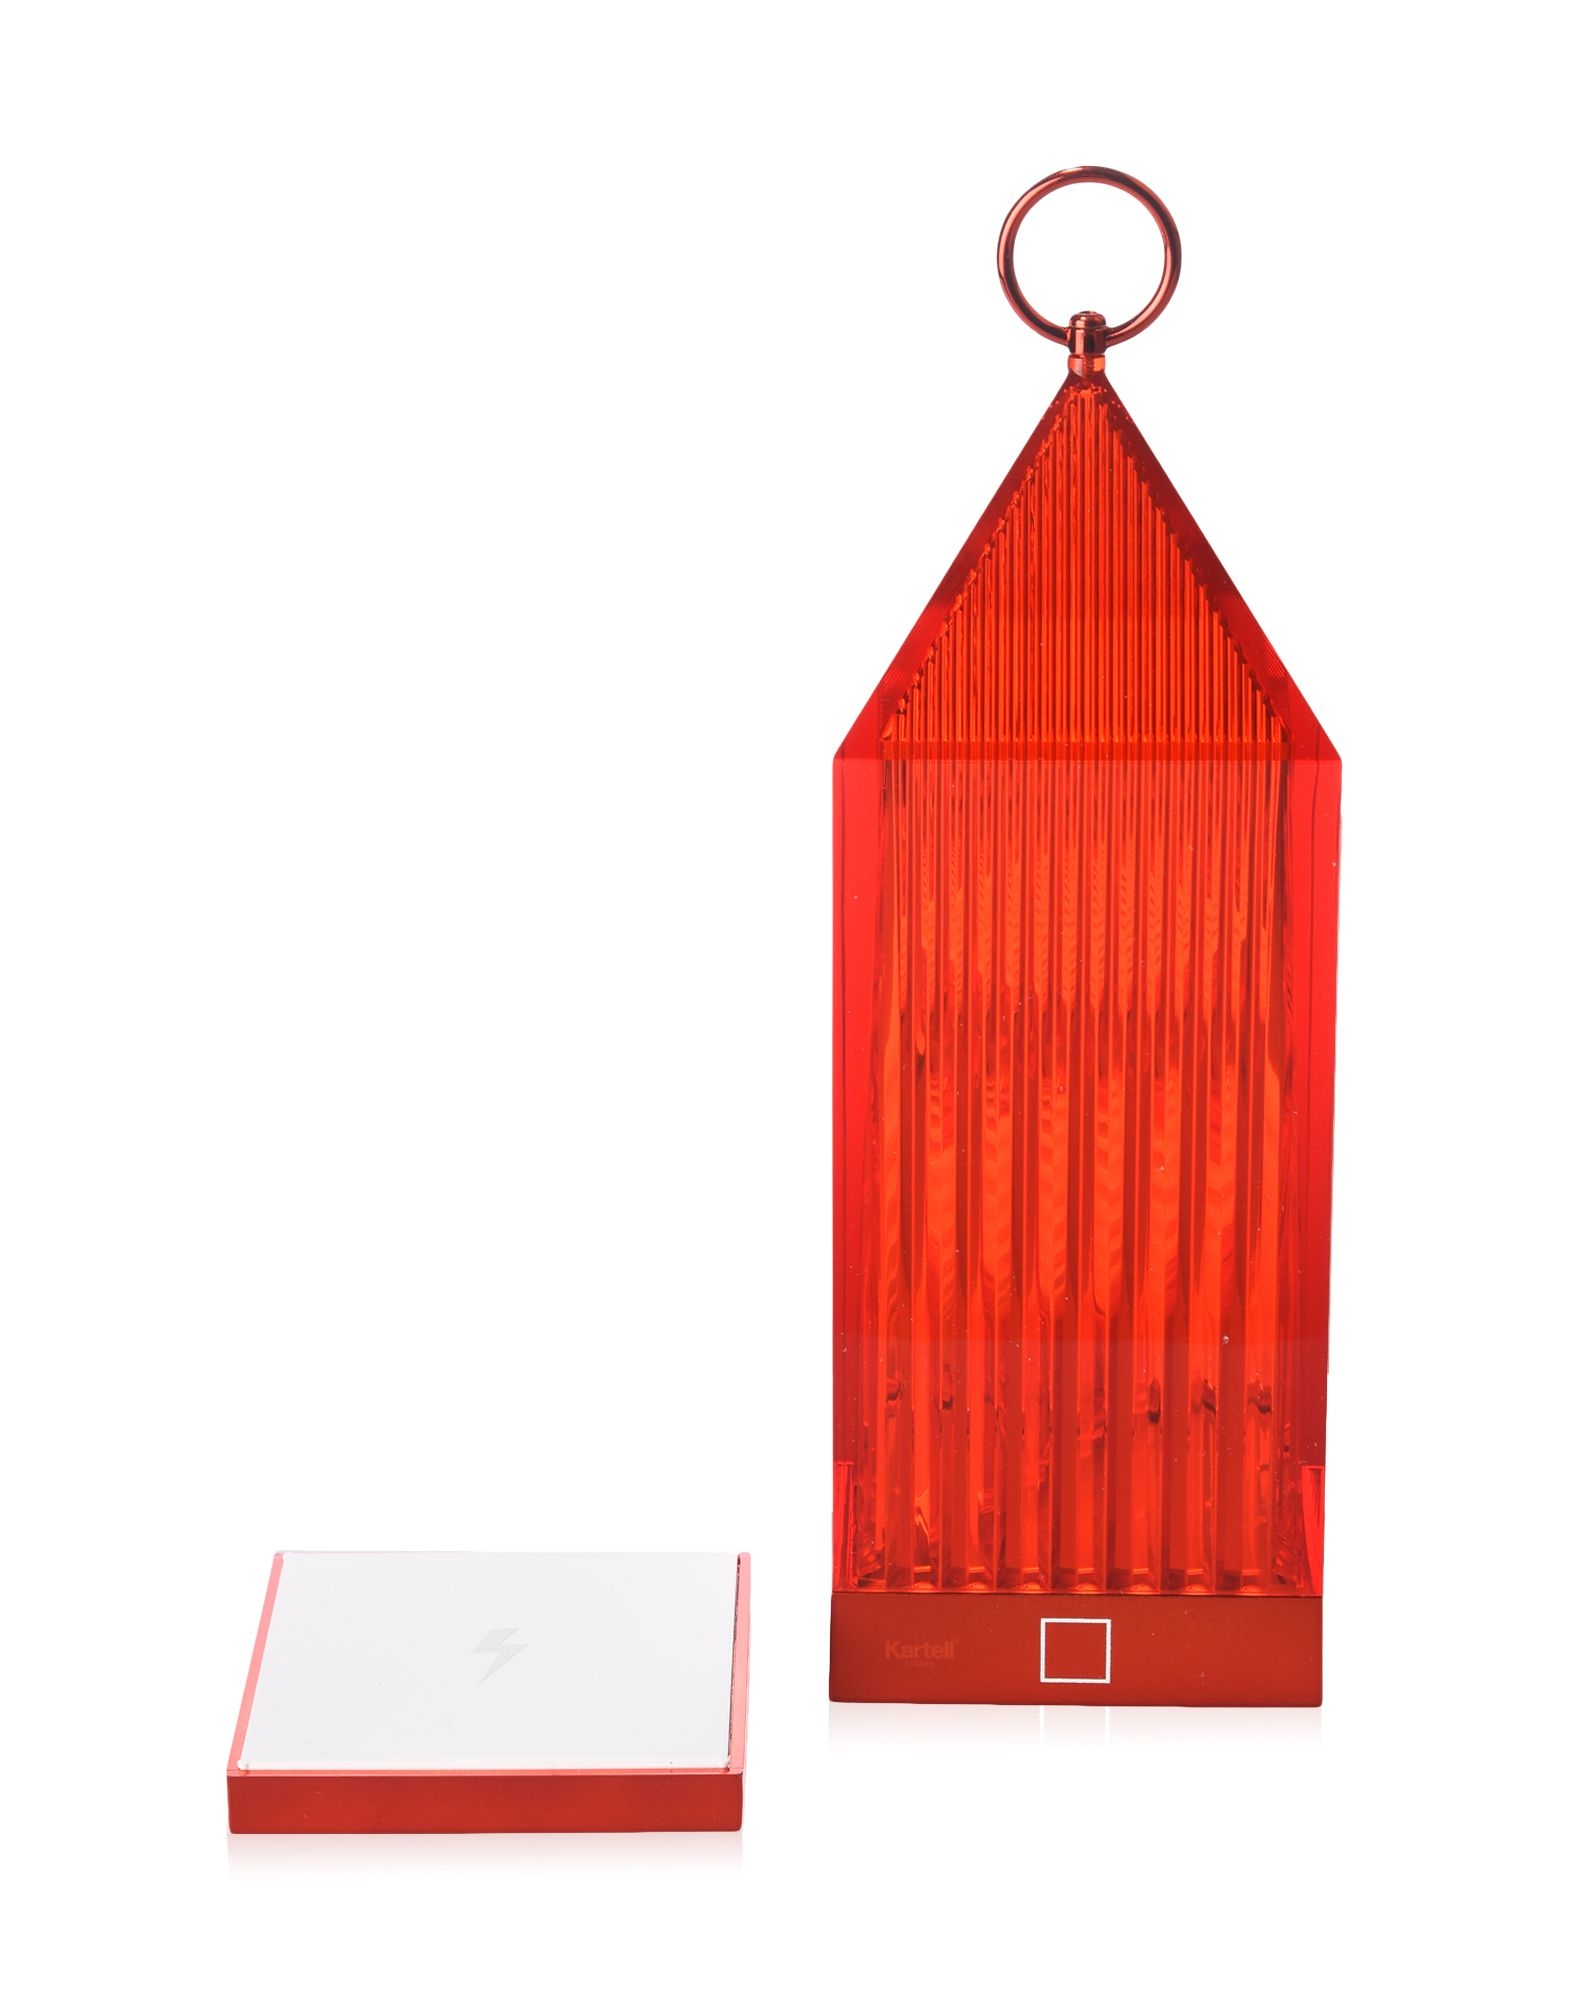 Lampa portabila de exterior Kartell Lantern design Fabio Novembre 1 2W LED rosu transparent